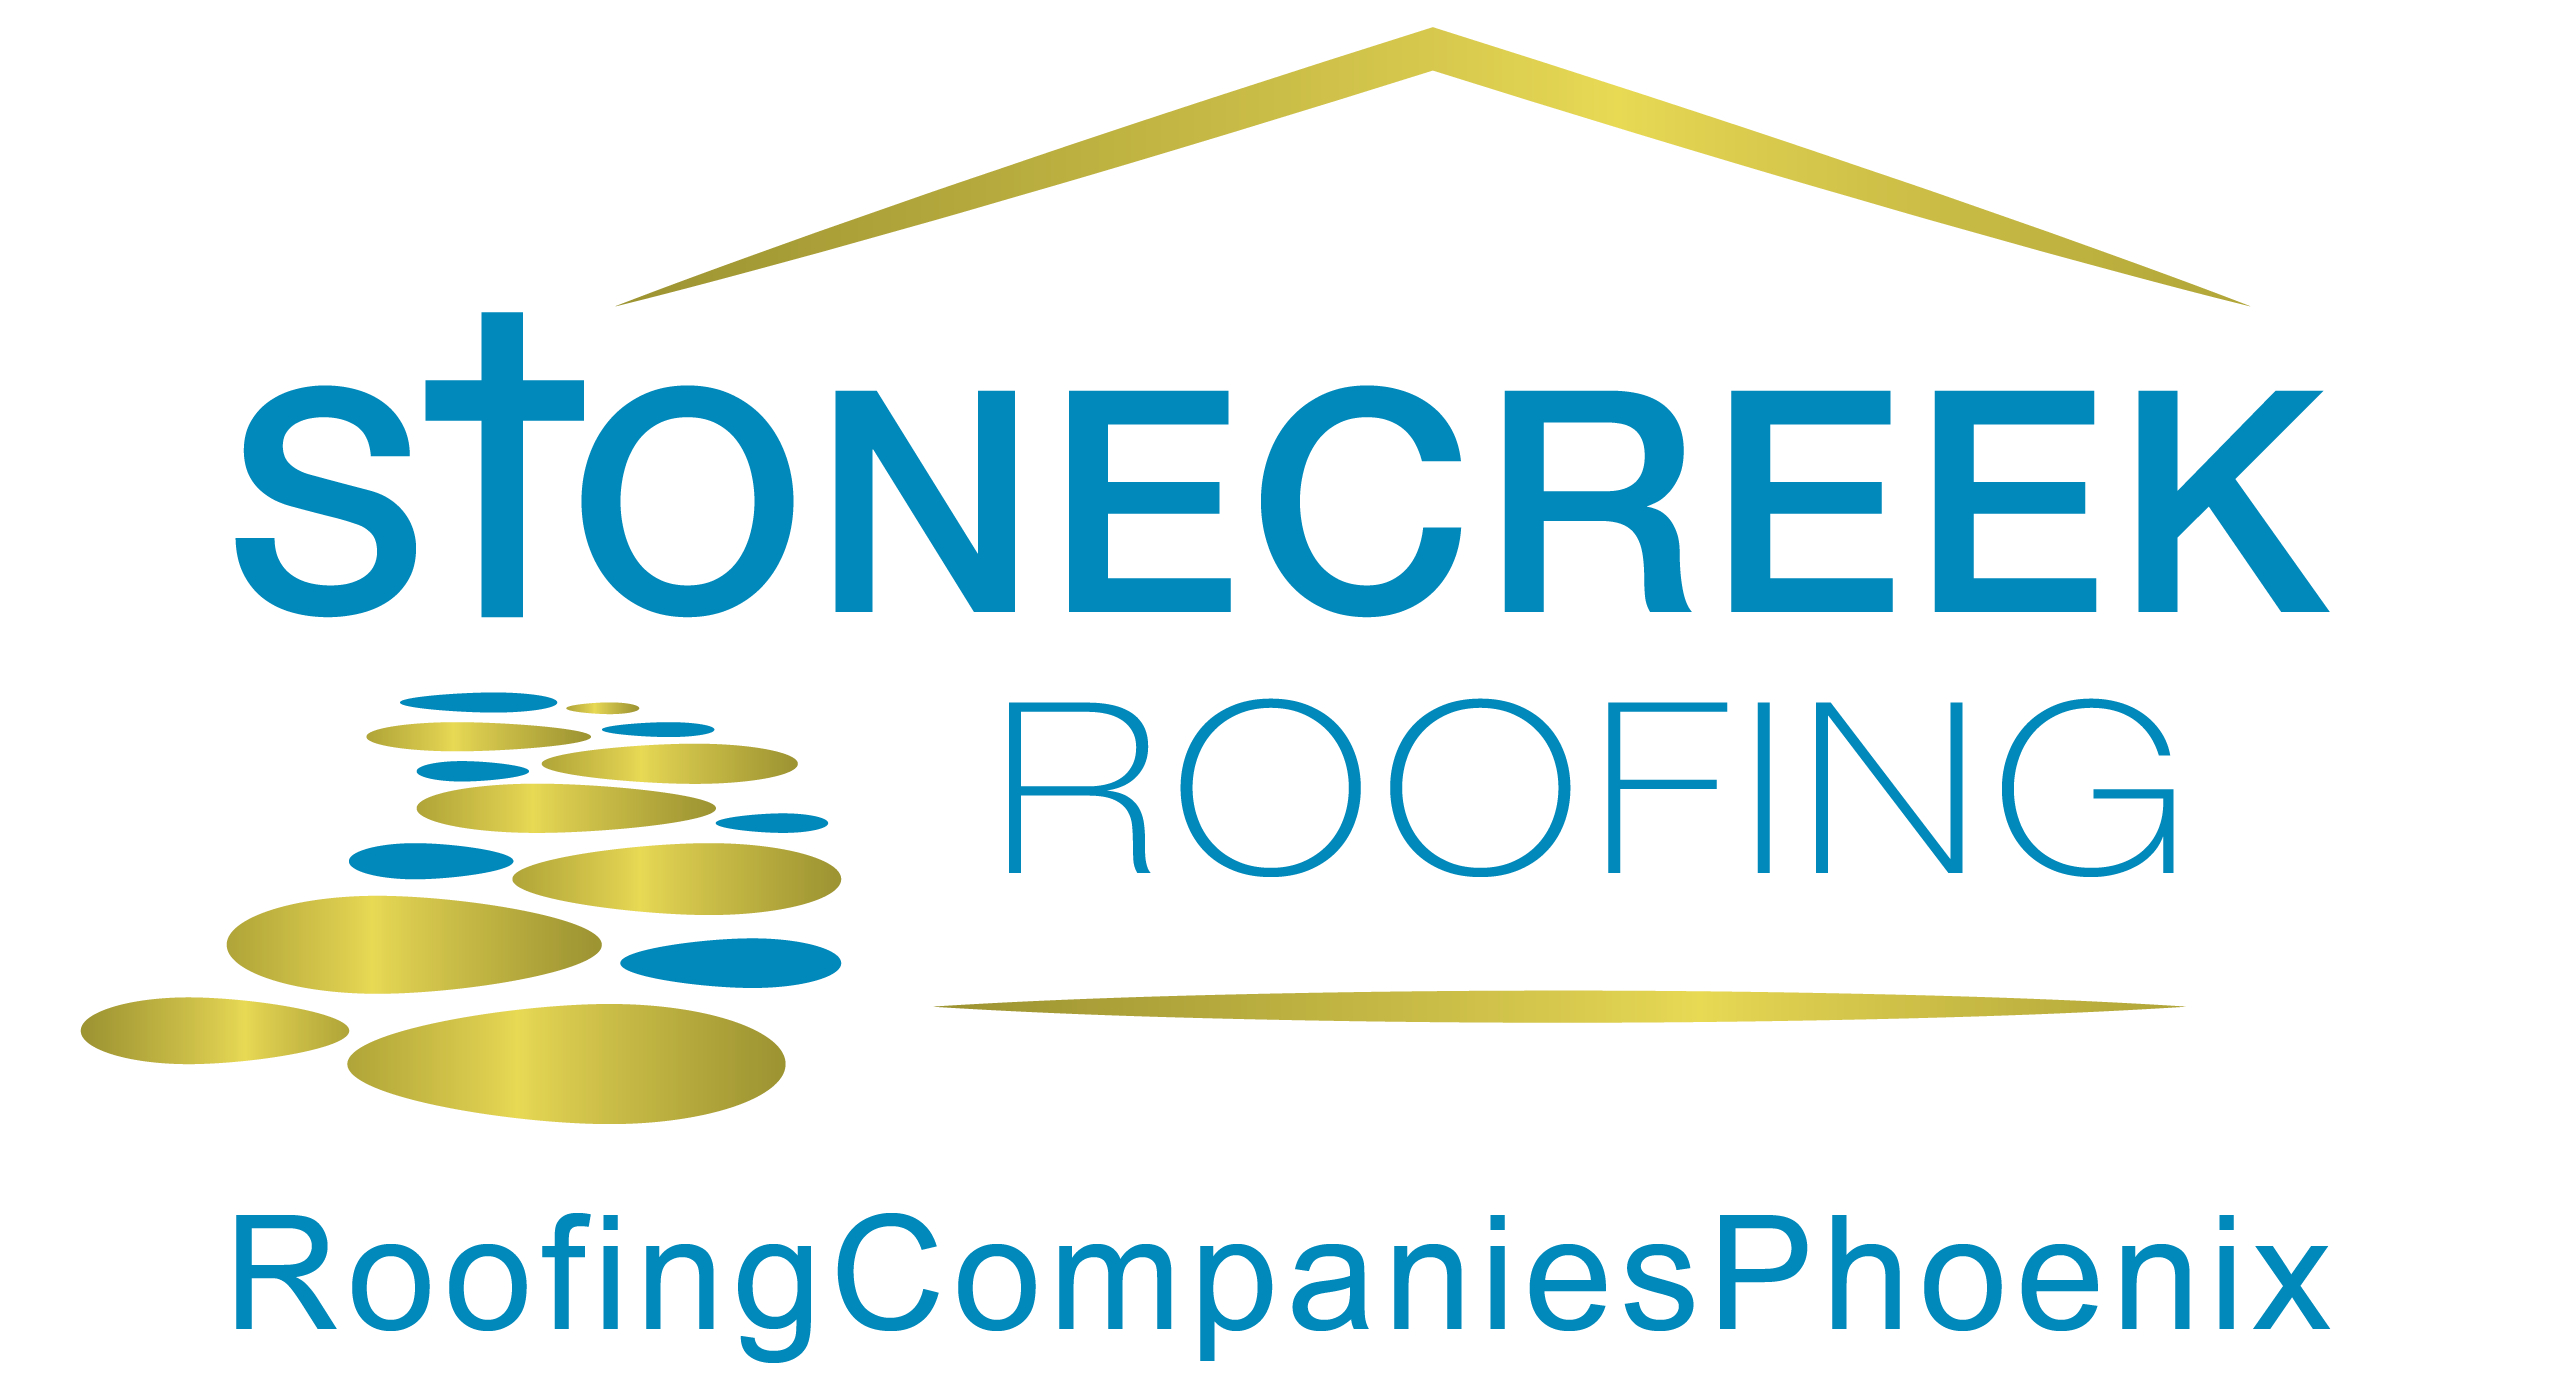 Roofing Companies Phoenix